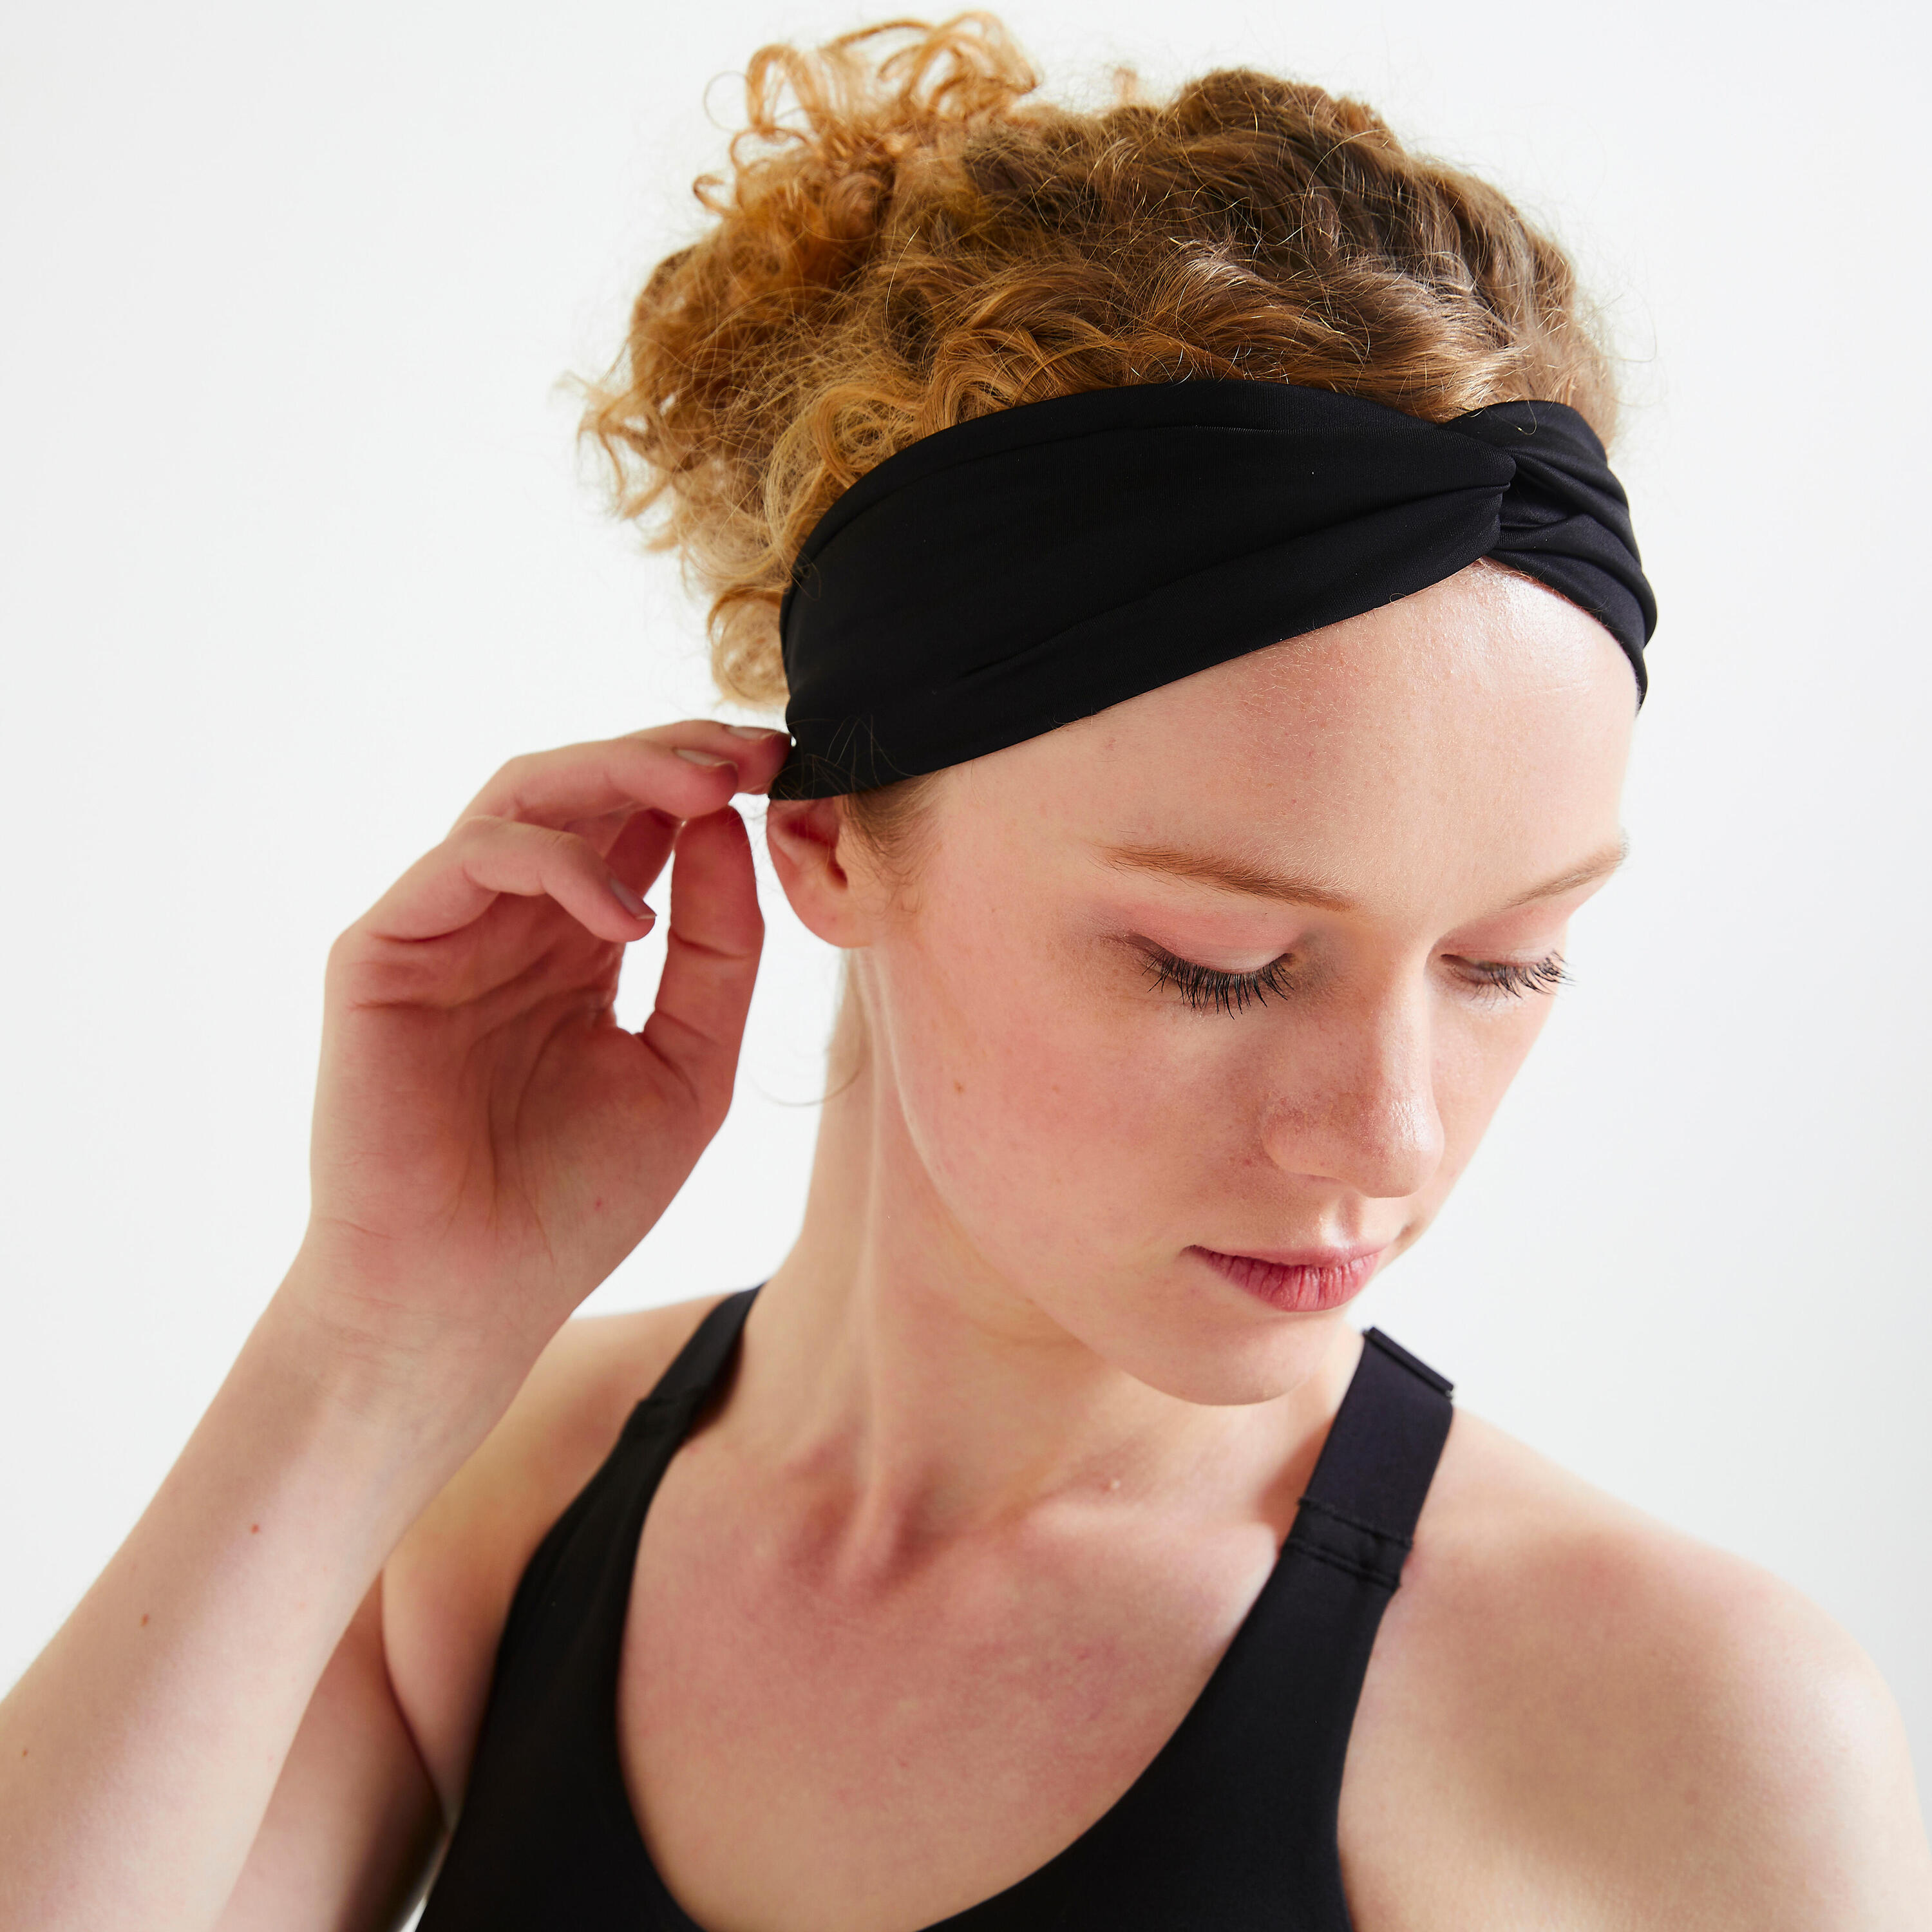 DOMYOS Women's Cardio Fitness Headband with Elastic - Black